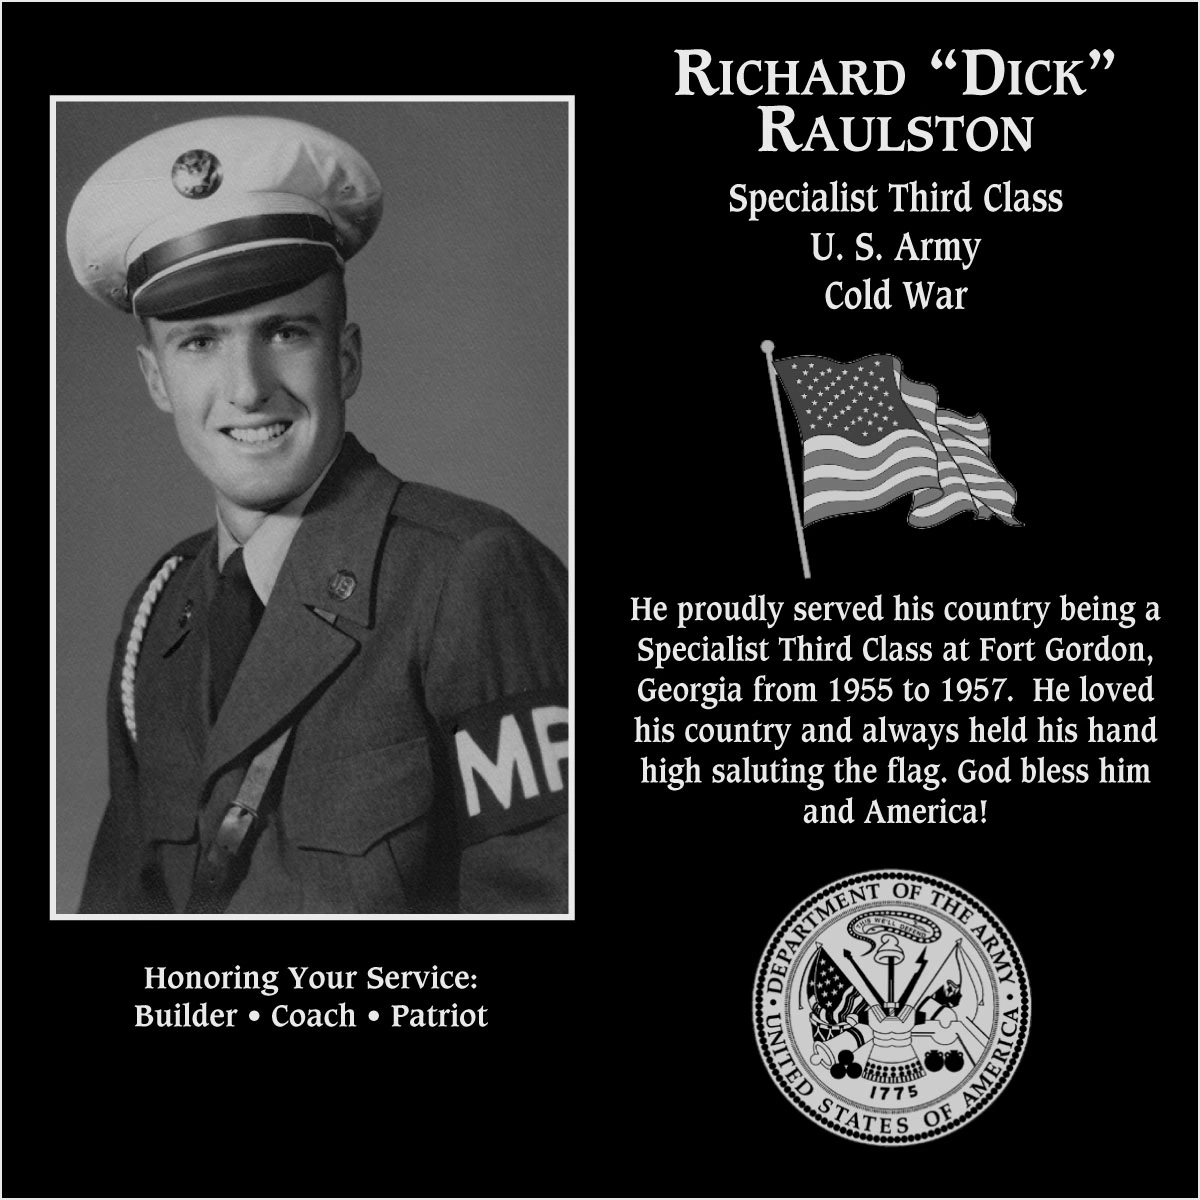 Richard “Dick” Raulston